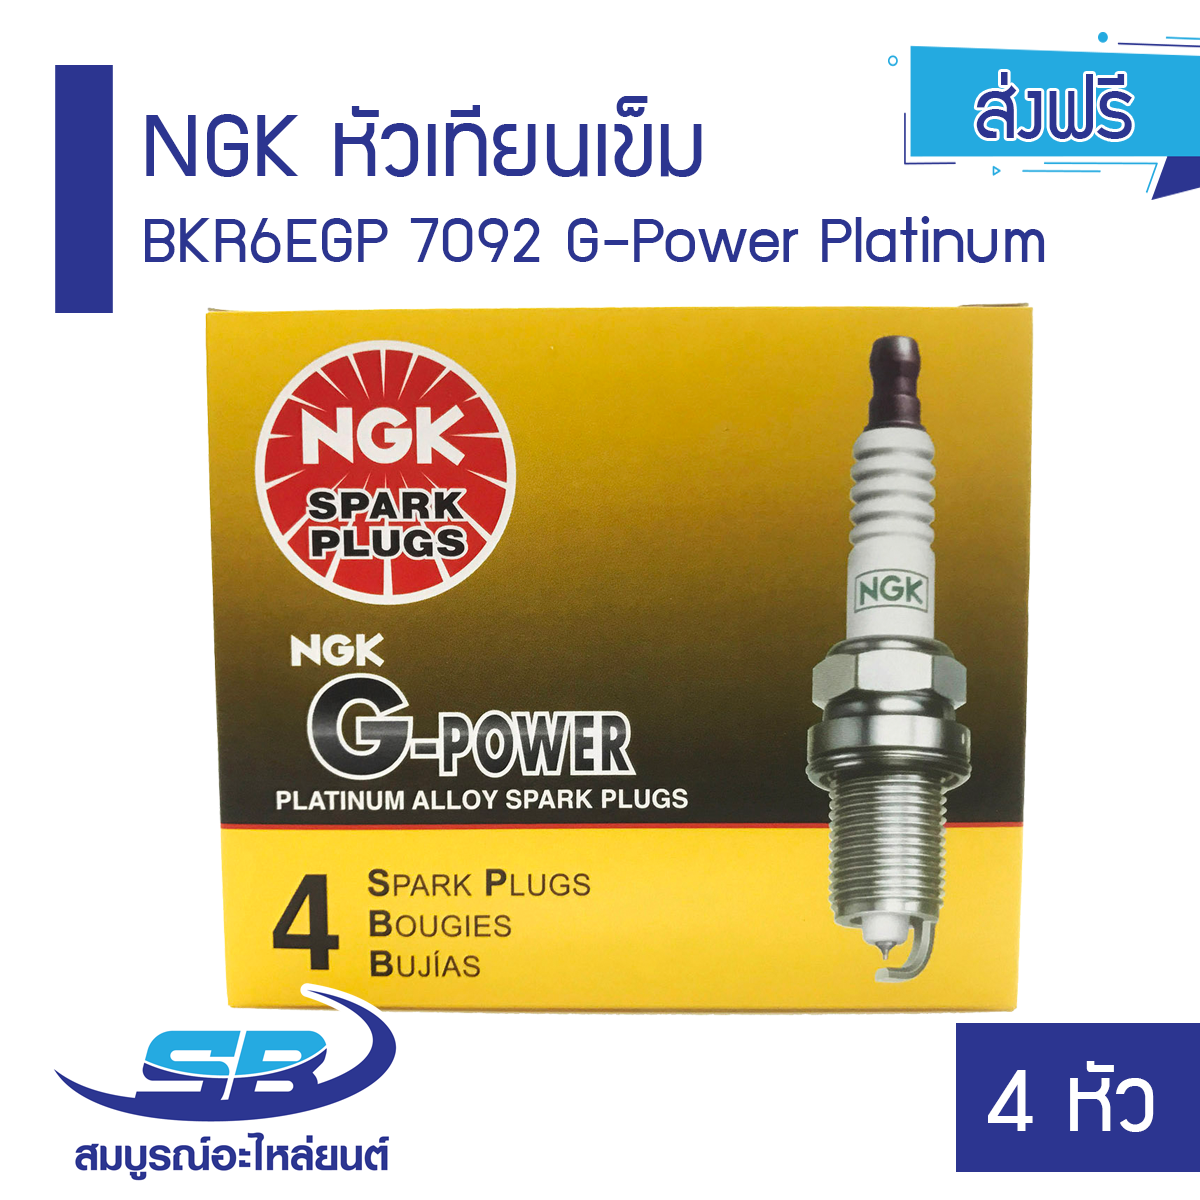 NGK หัวเทียนแท้ BKR6EGP 7092 G-Power Platinum (หัวเทียนเข็ม) จำนวน 4 หัว ส่งฟรี